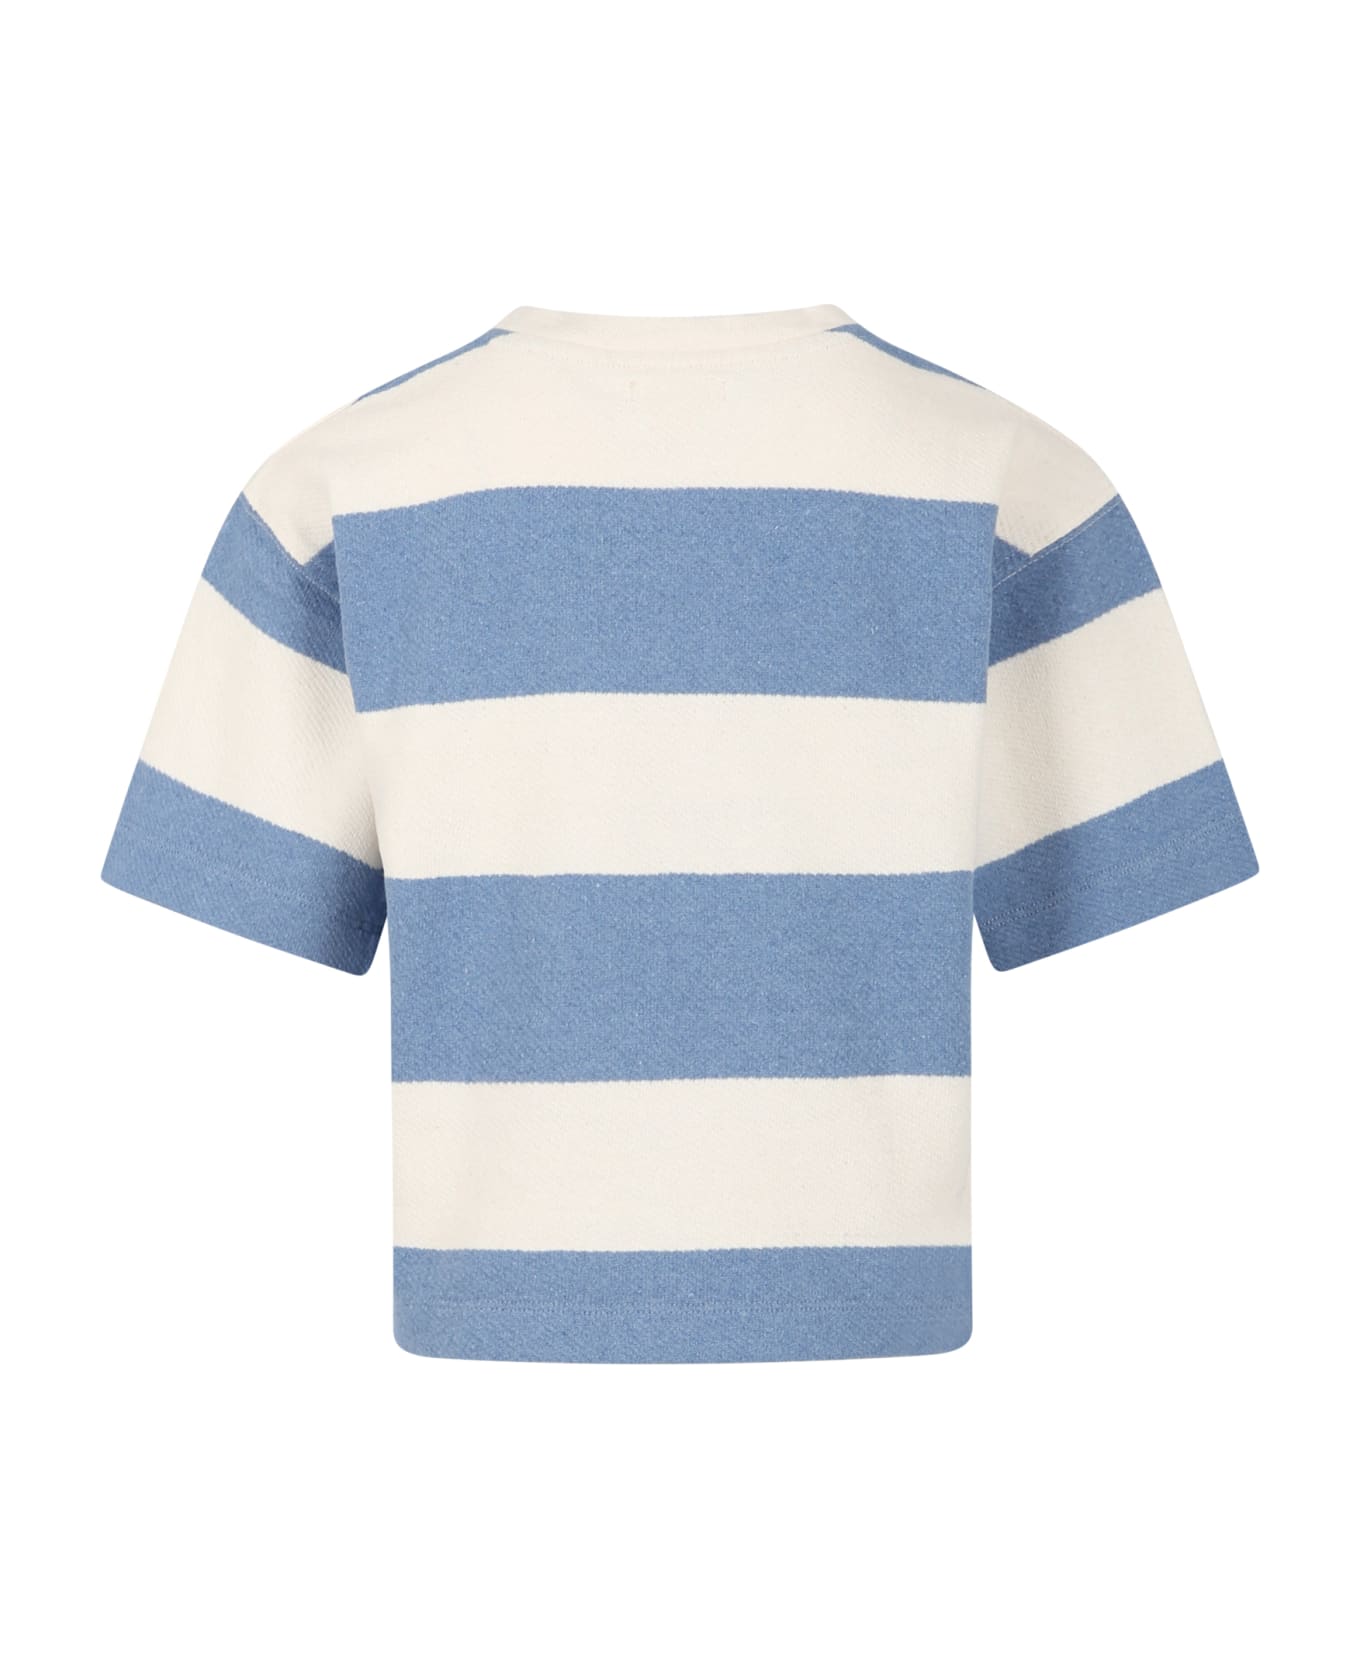 Bellerose Multicolor Striped T-shirt For Boy - Multicolor